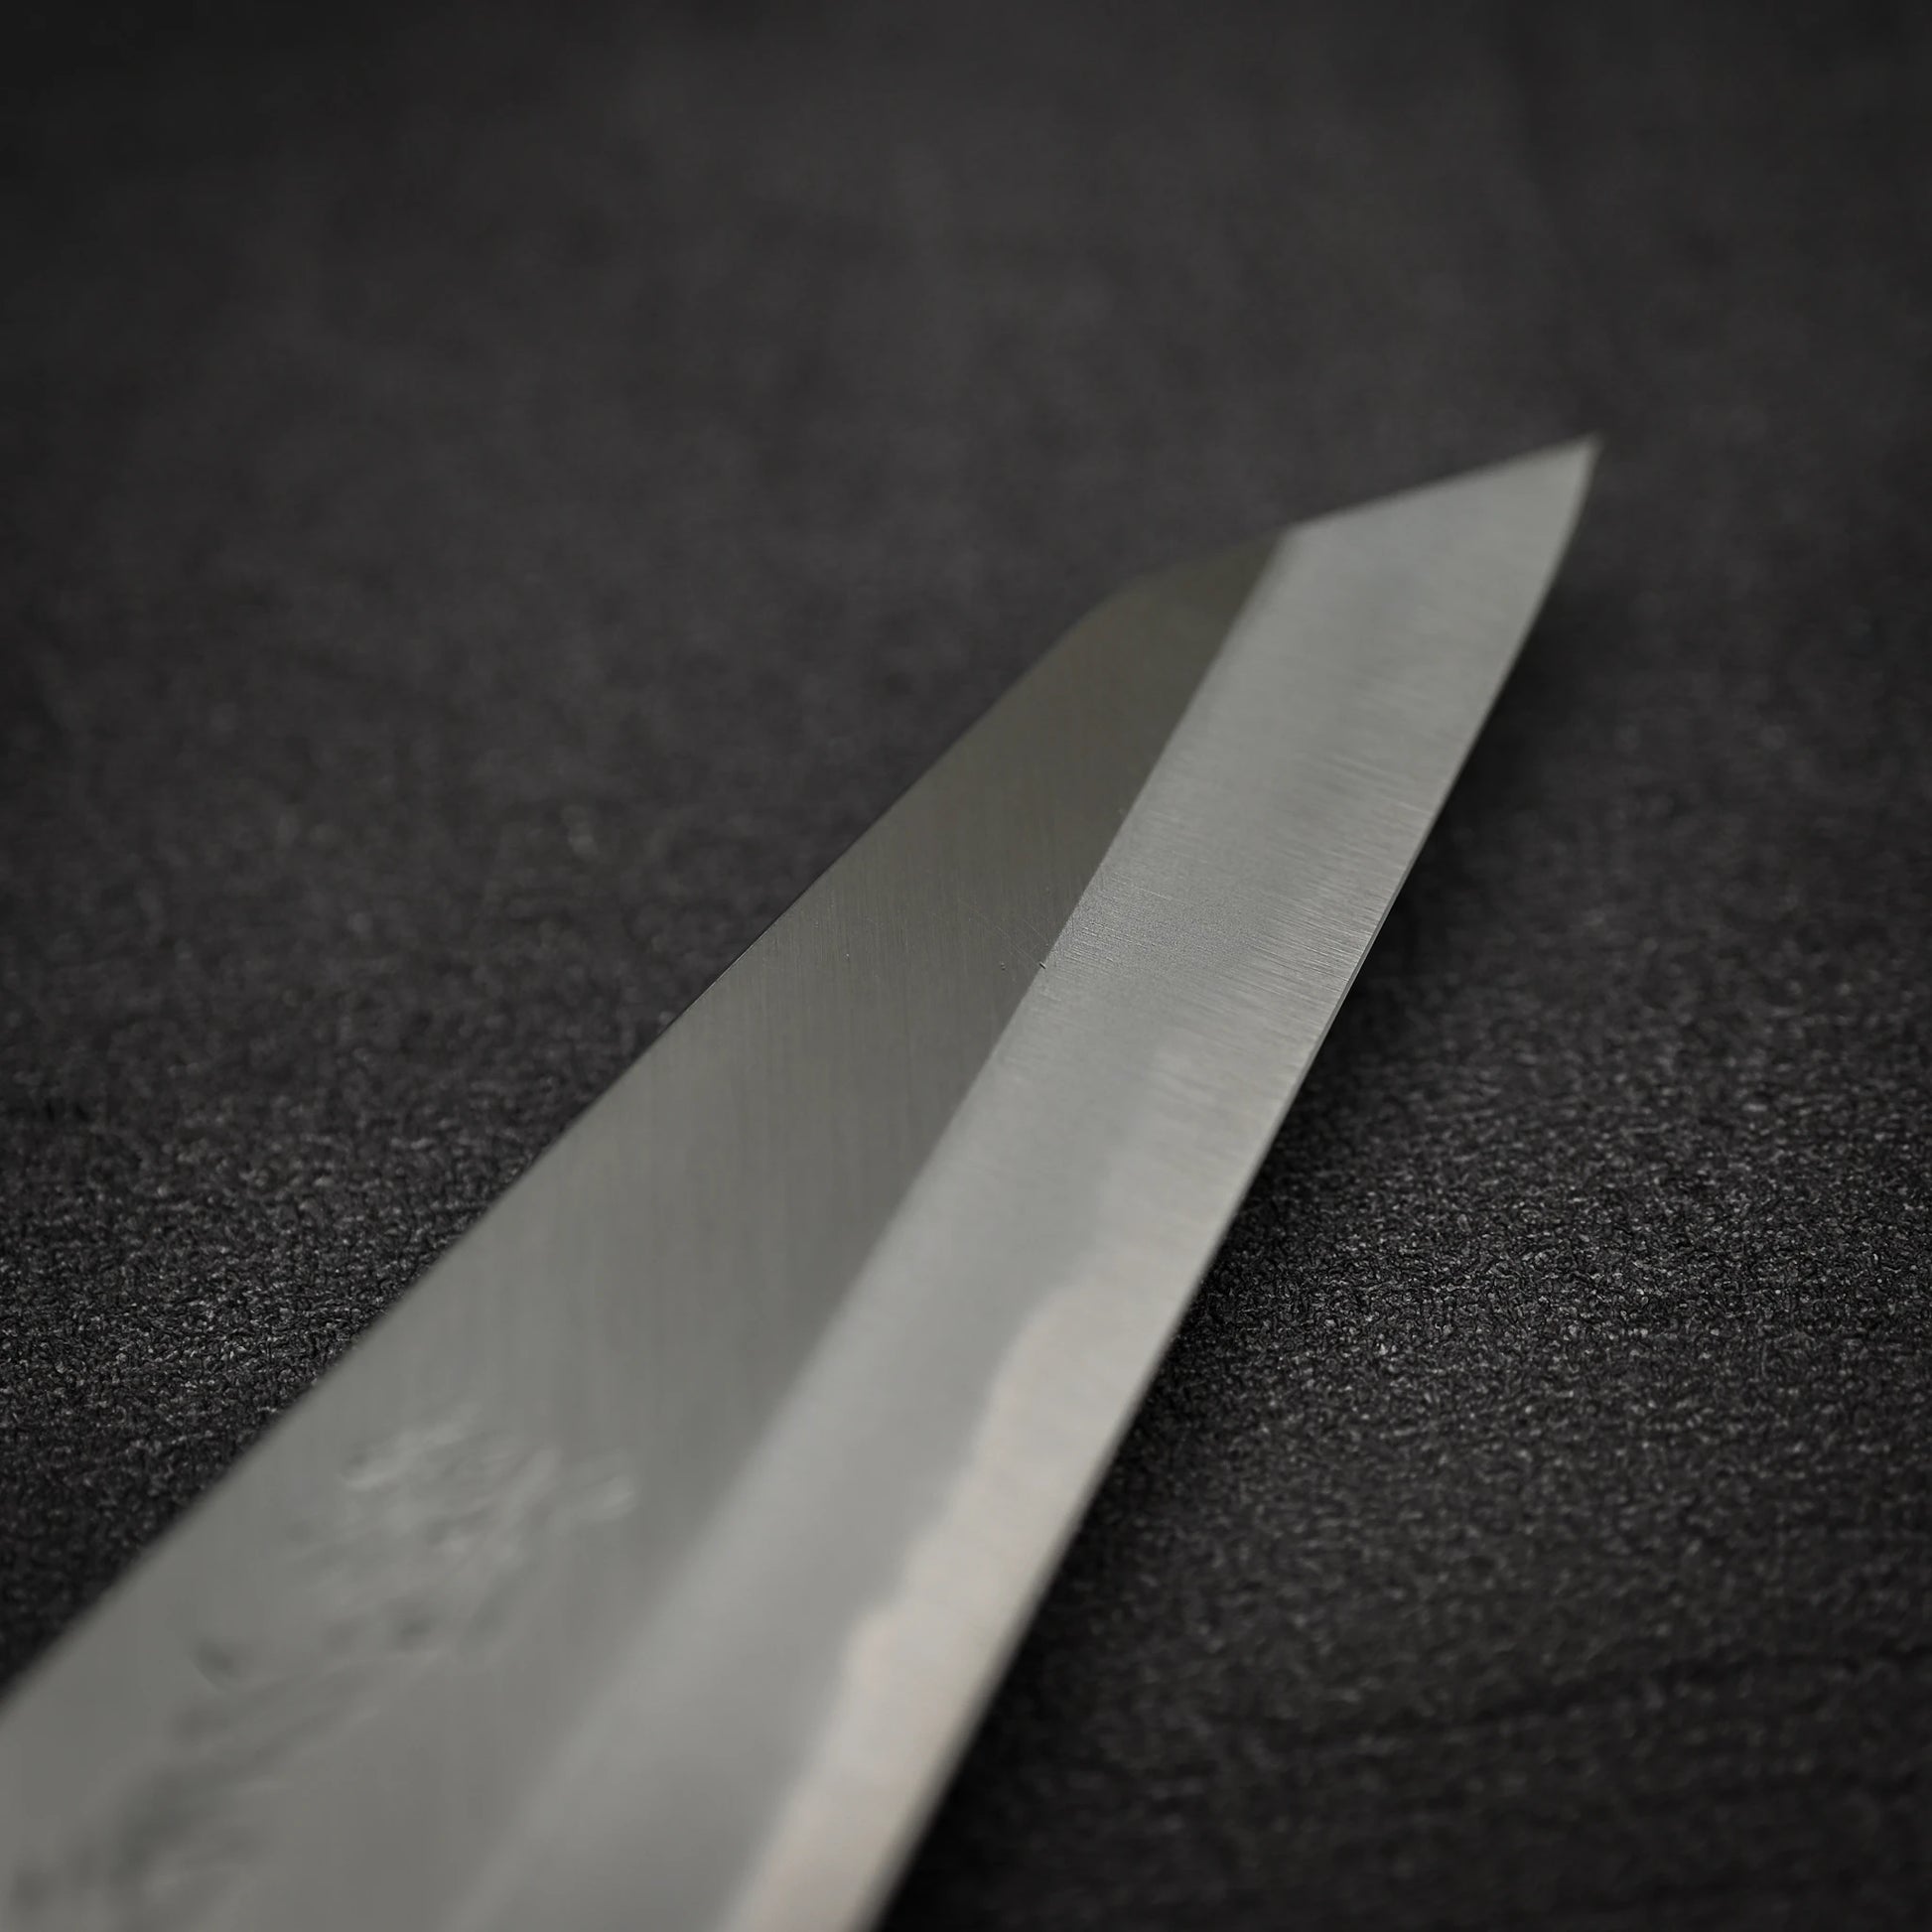 Close up view of the tip area of Yoshikazu Tanaka shirogami#1 double bevel honesuki knife